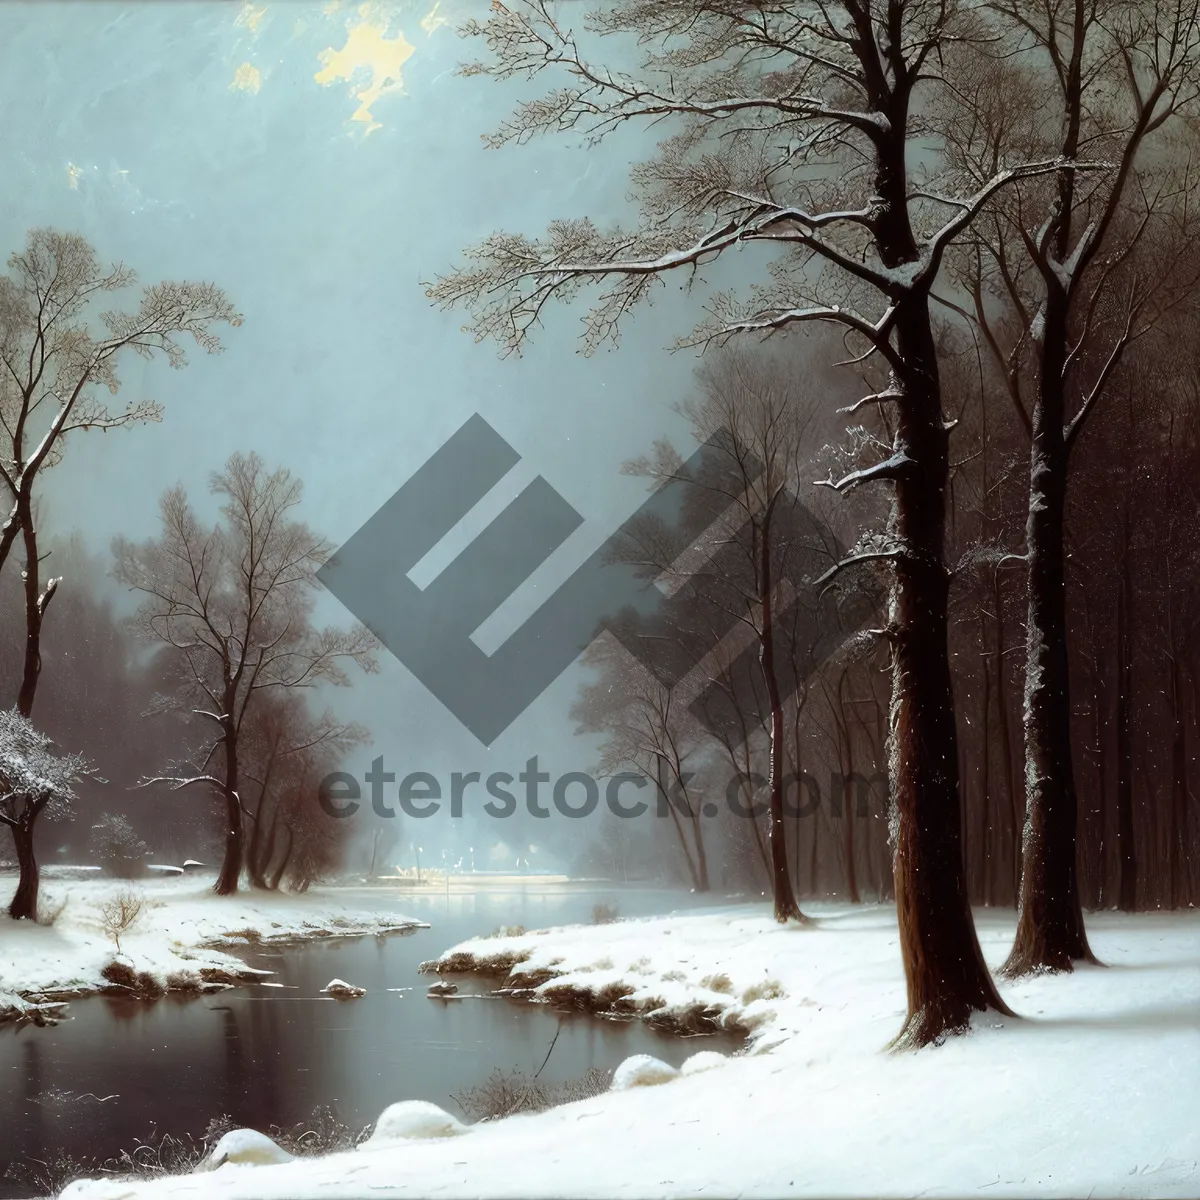 Picture of Winter Wonderland: Serene snowy forest landscape